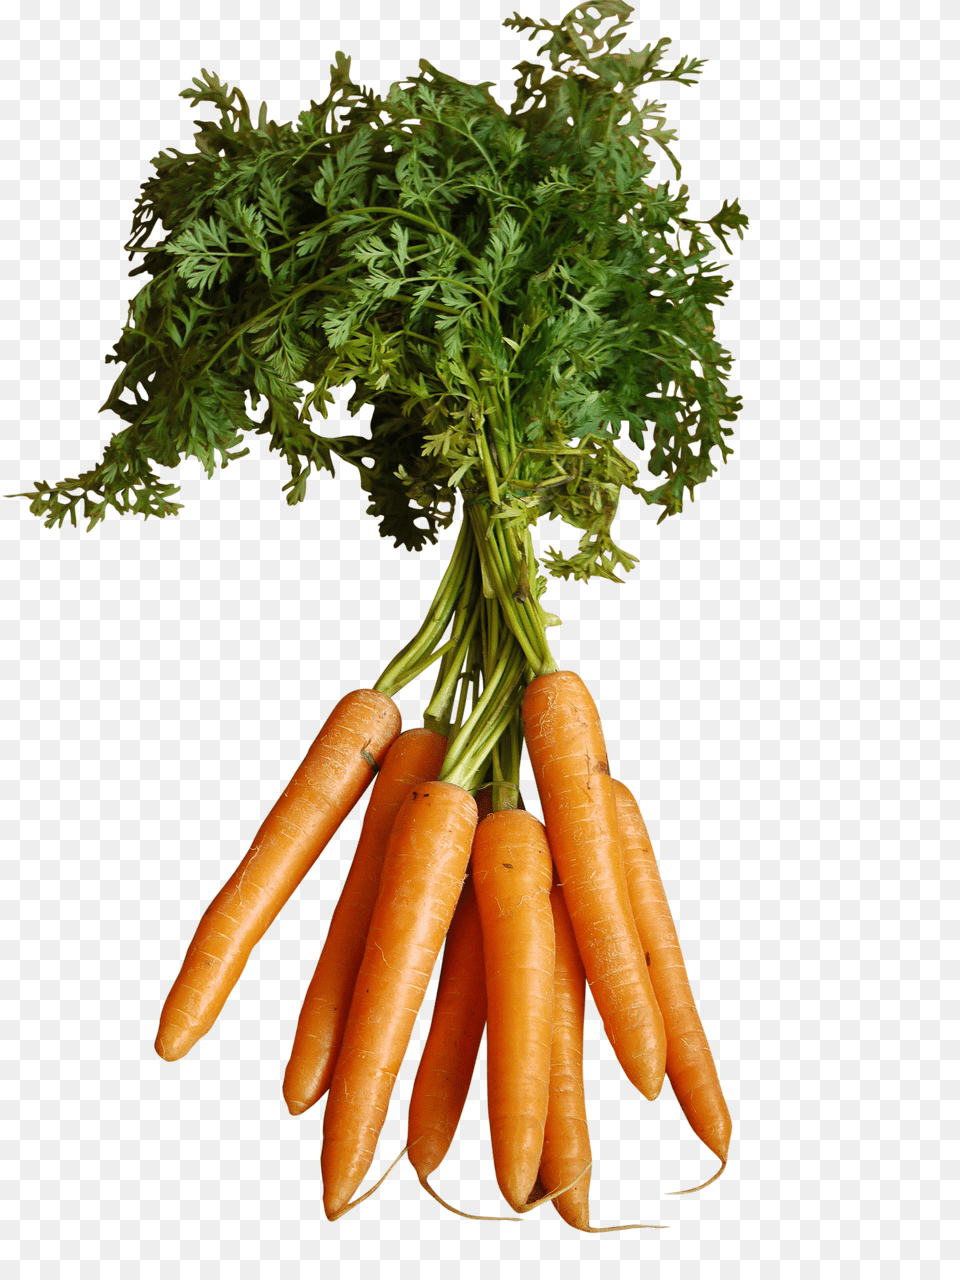 Orange Carrots With Stem Image Purepng Free Png Download